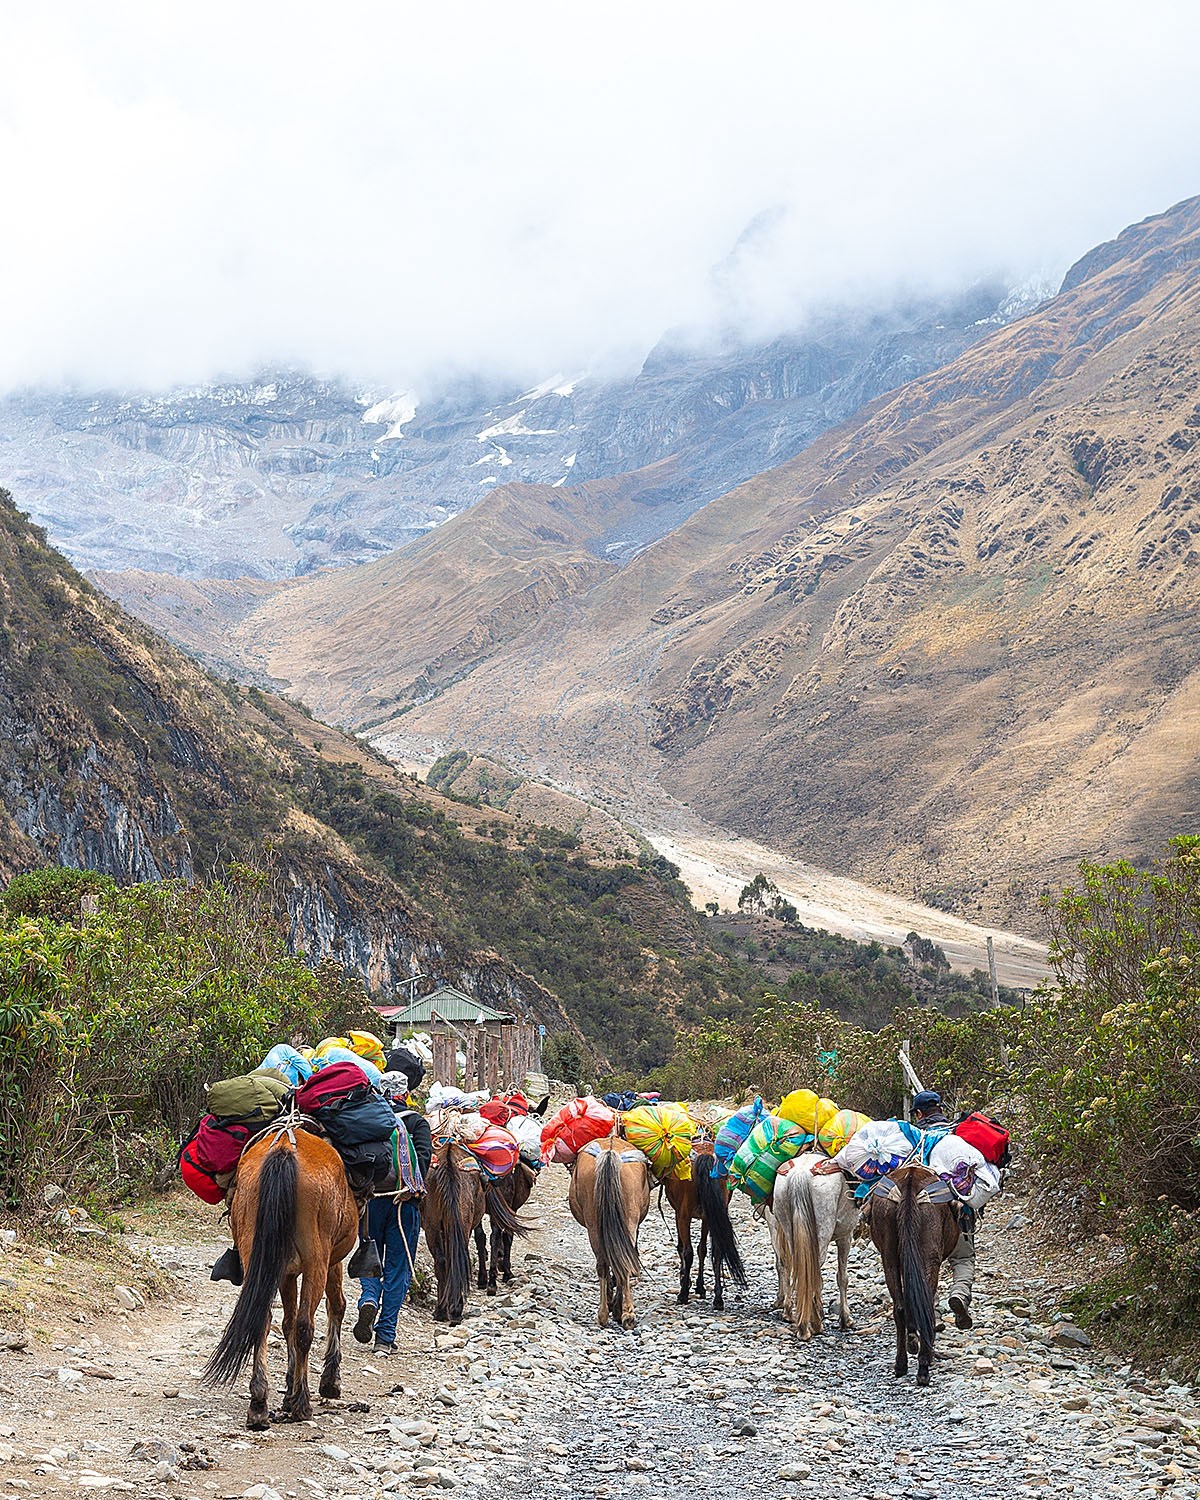 Andes are popular trekking destination - 